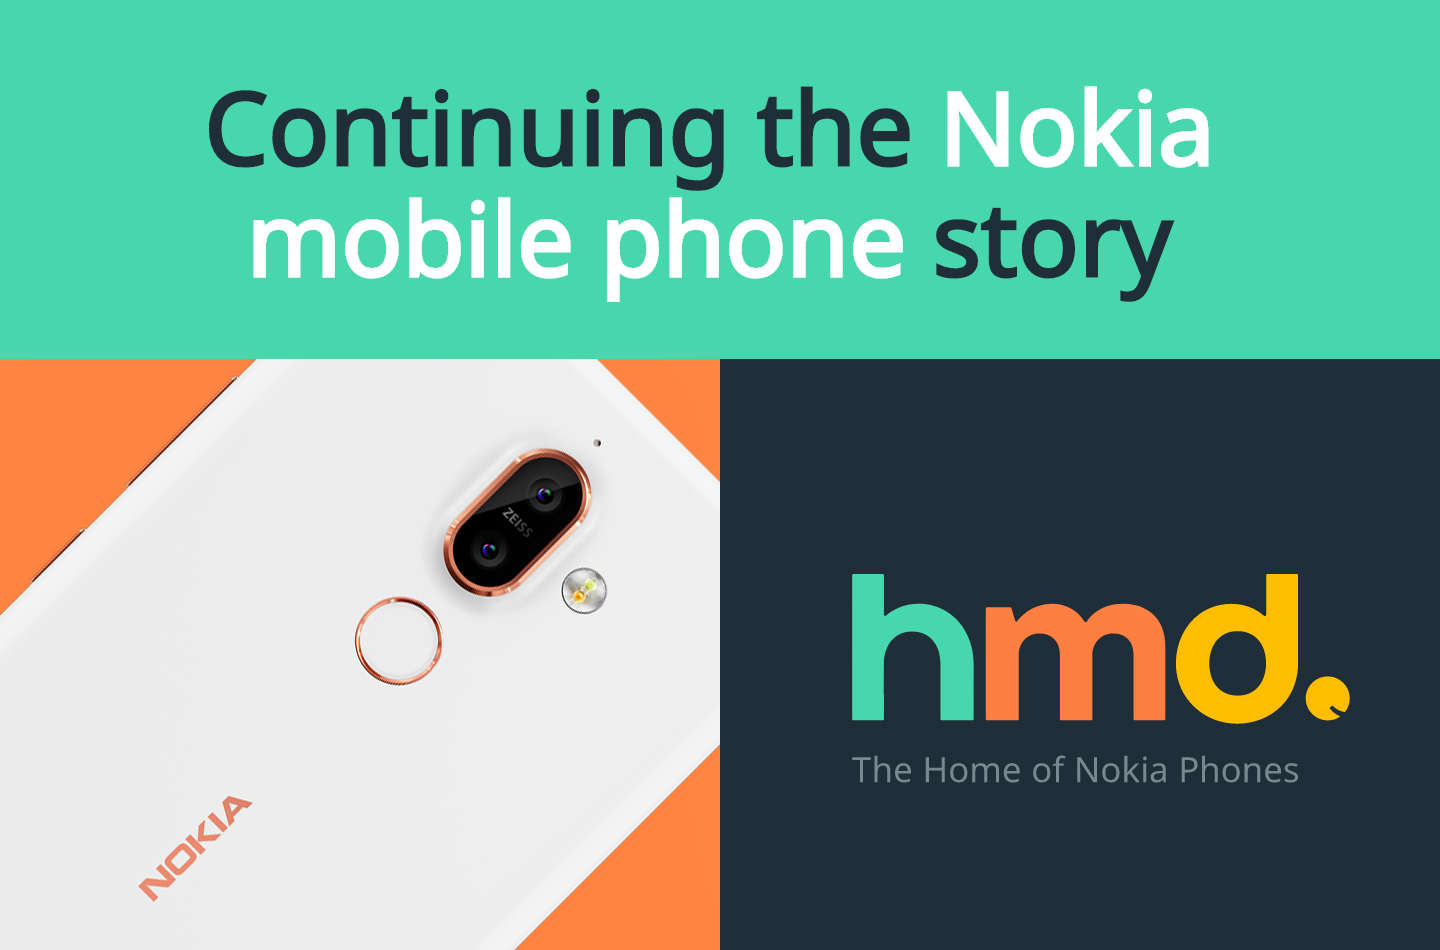 Nokia smartphone design